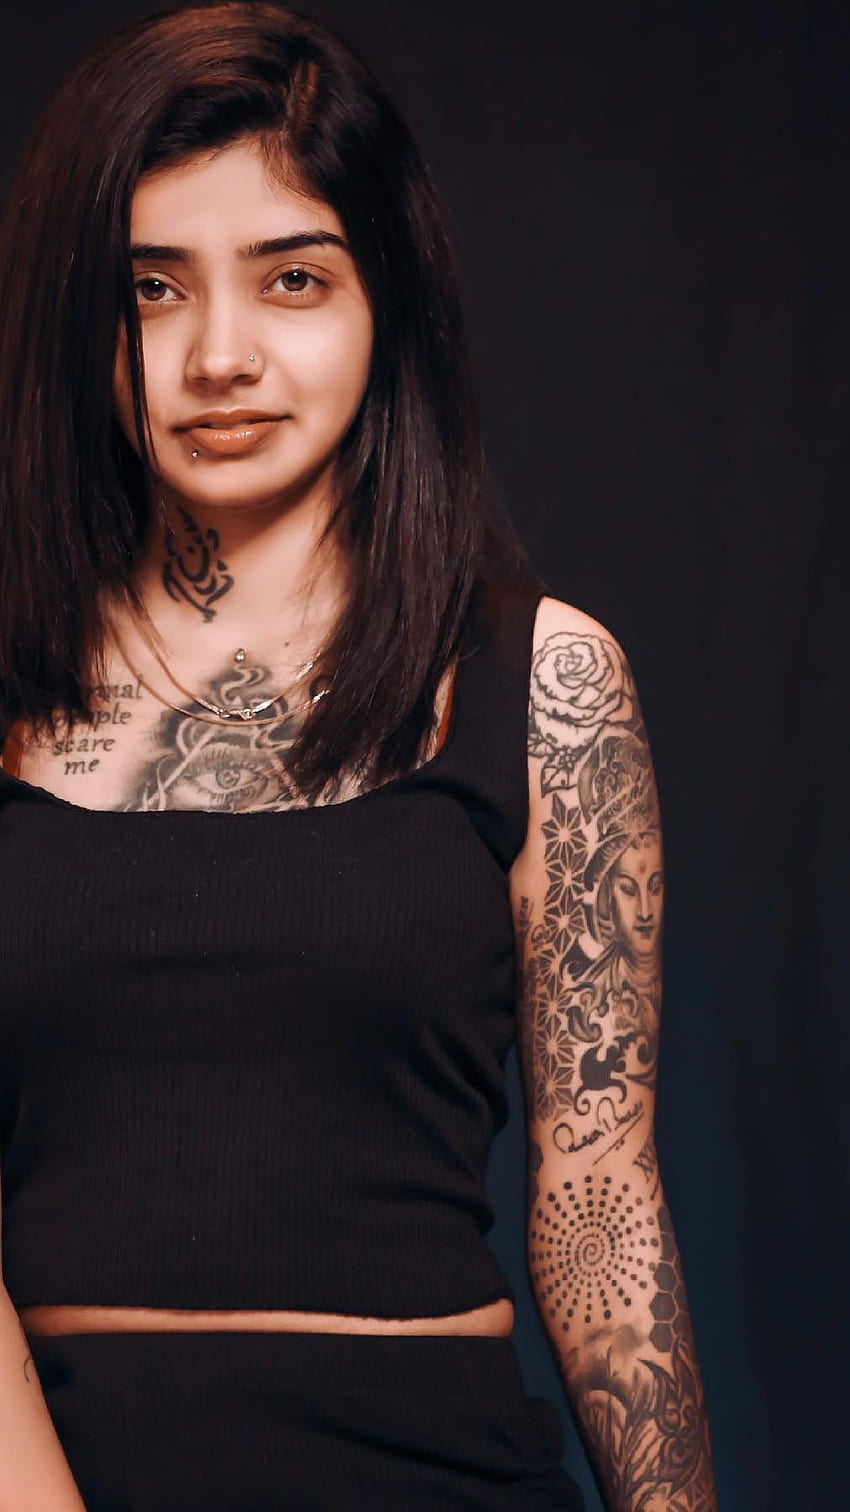 Tattoo Artist Has 442 Brands Tattooed On Body - YouTube